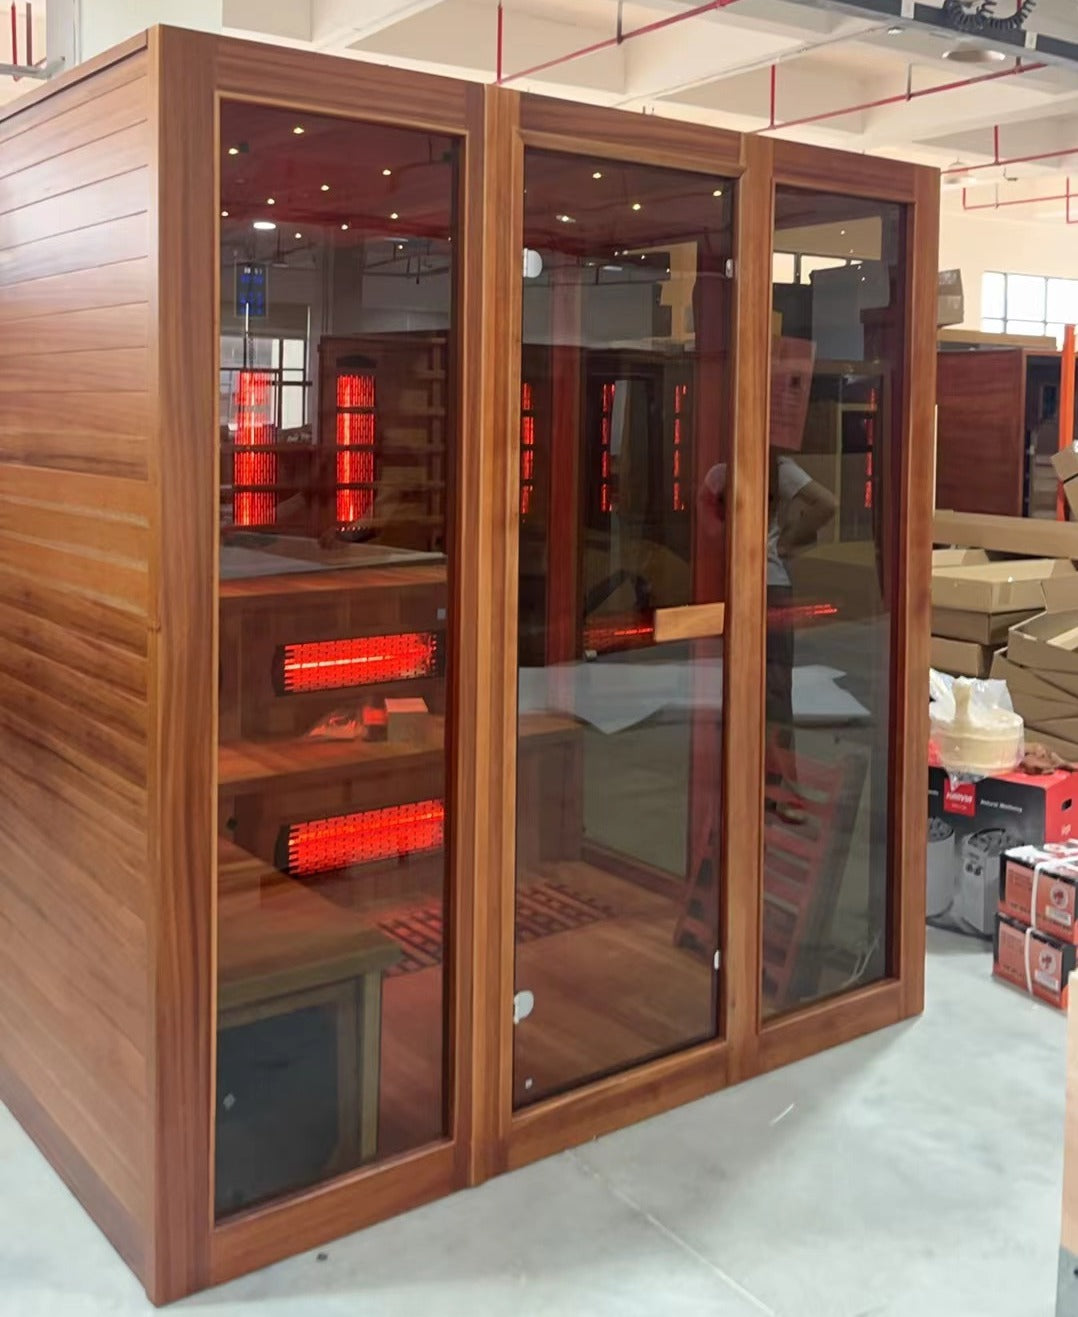 SAUNASNET® Solid Indoor Wooden Infrared Spa Sauna Steam Room Dual System 05